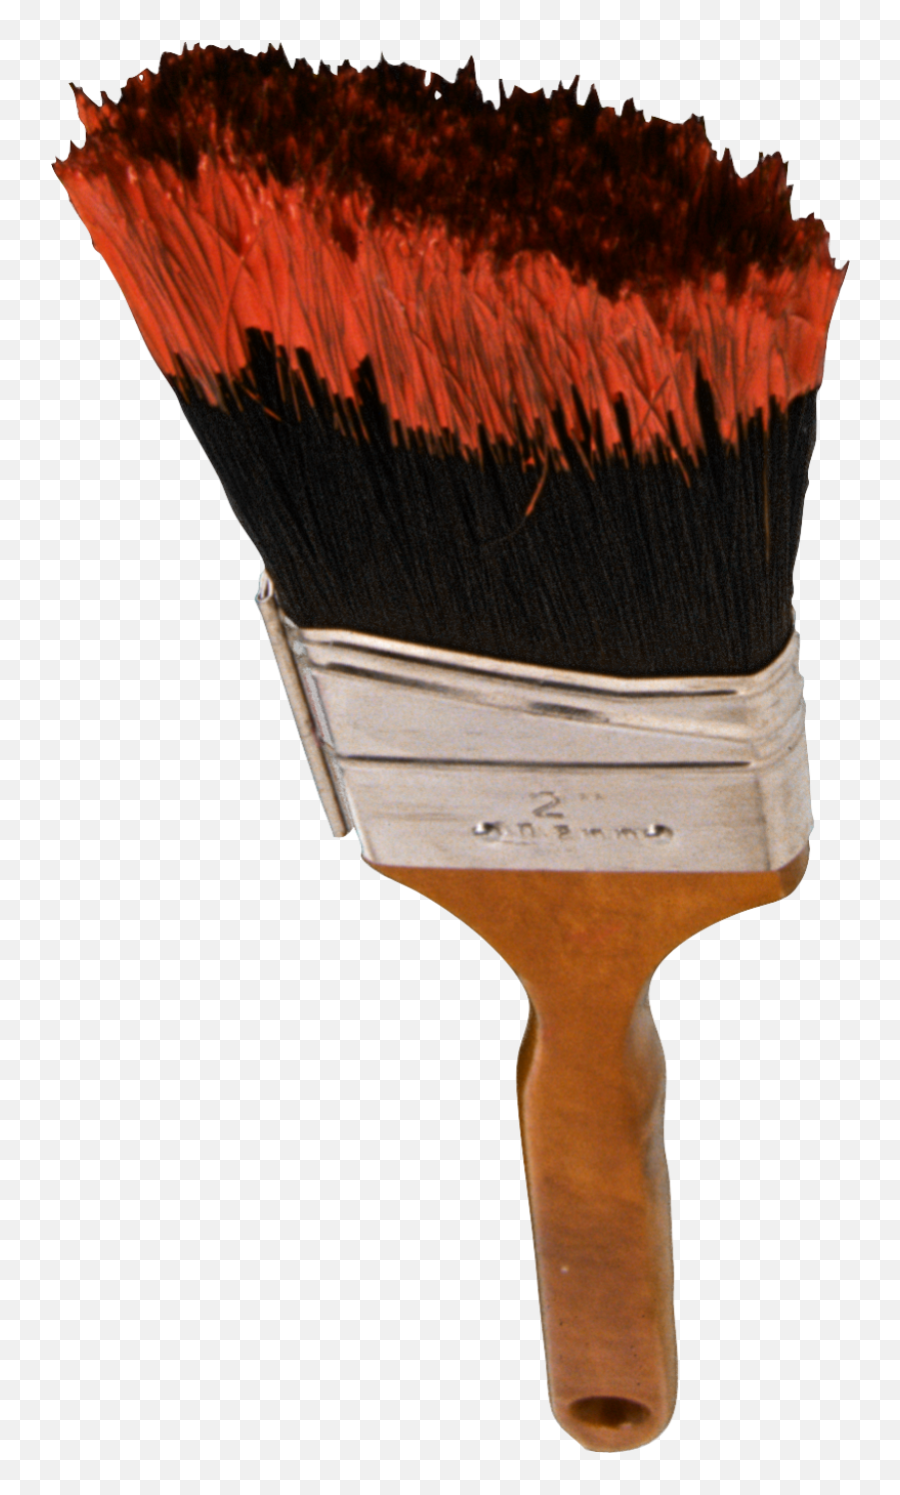 Paint Brush Png Image - Paintbrush,Paint Brush Png